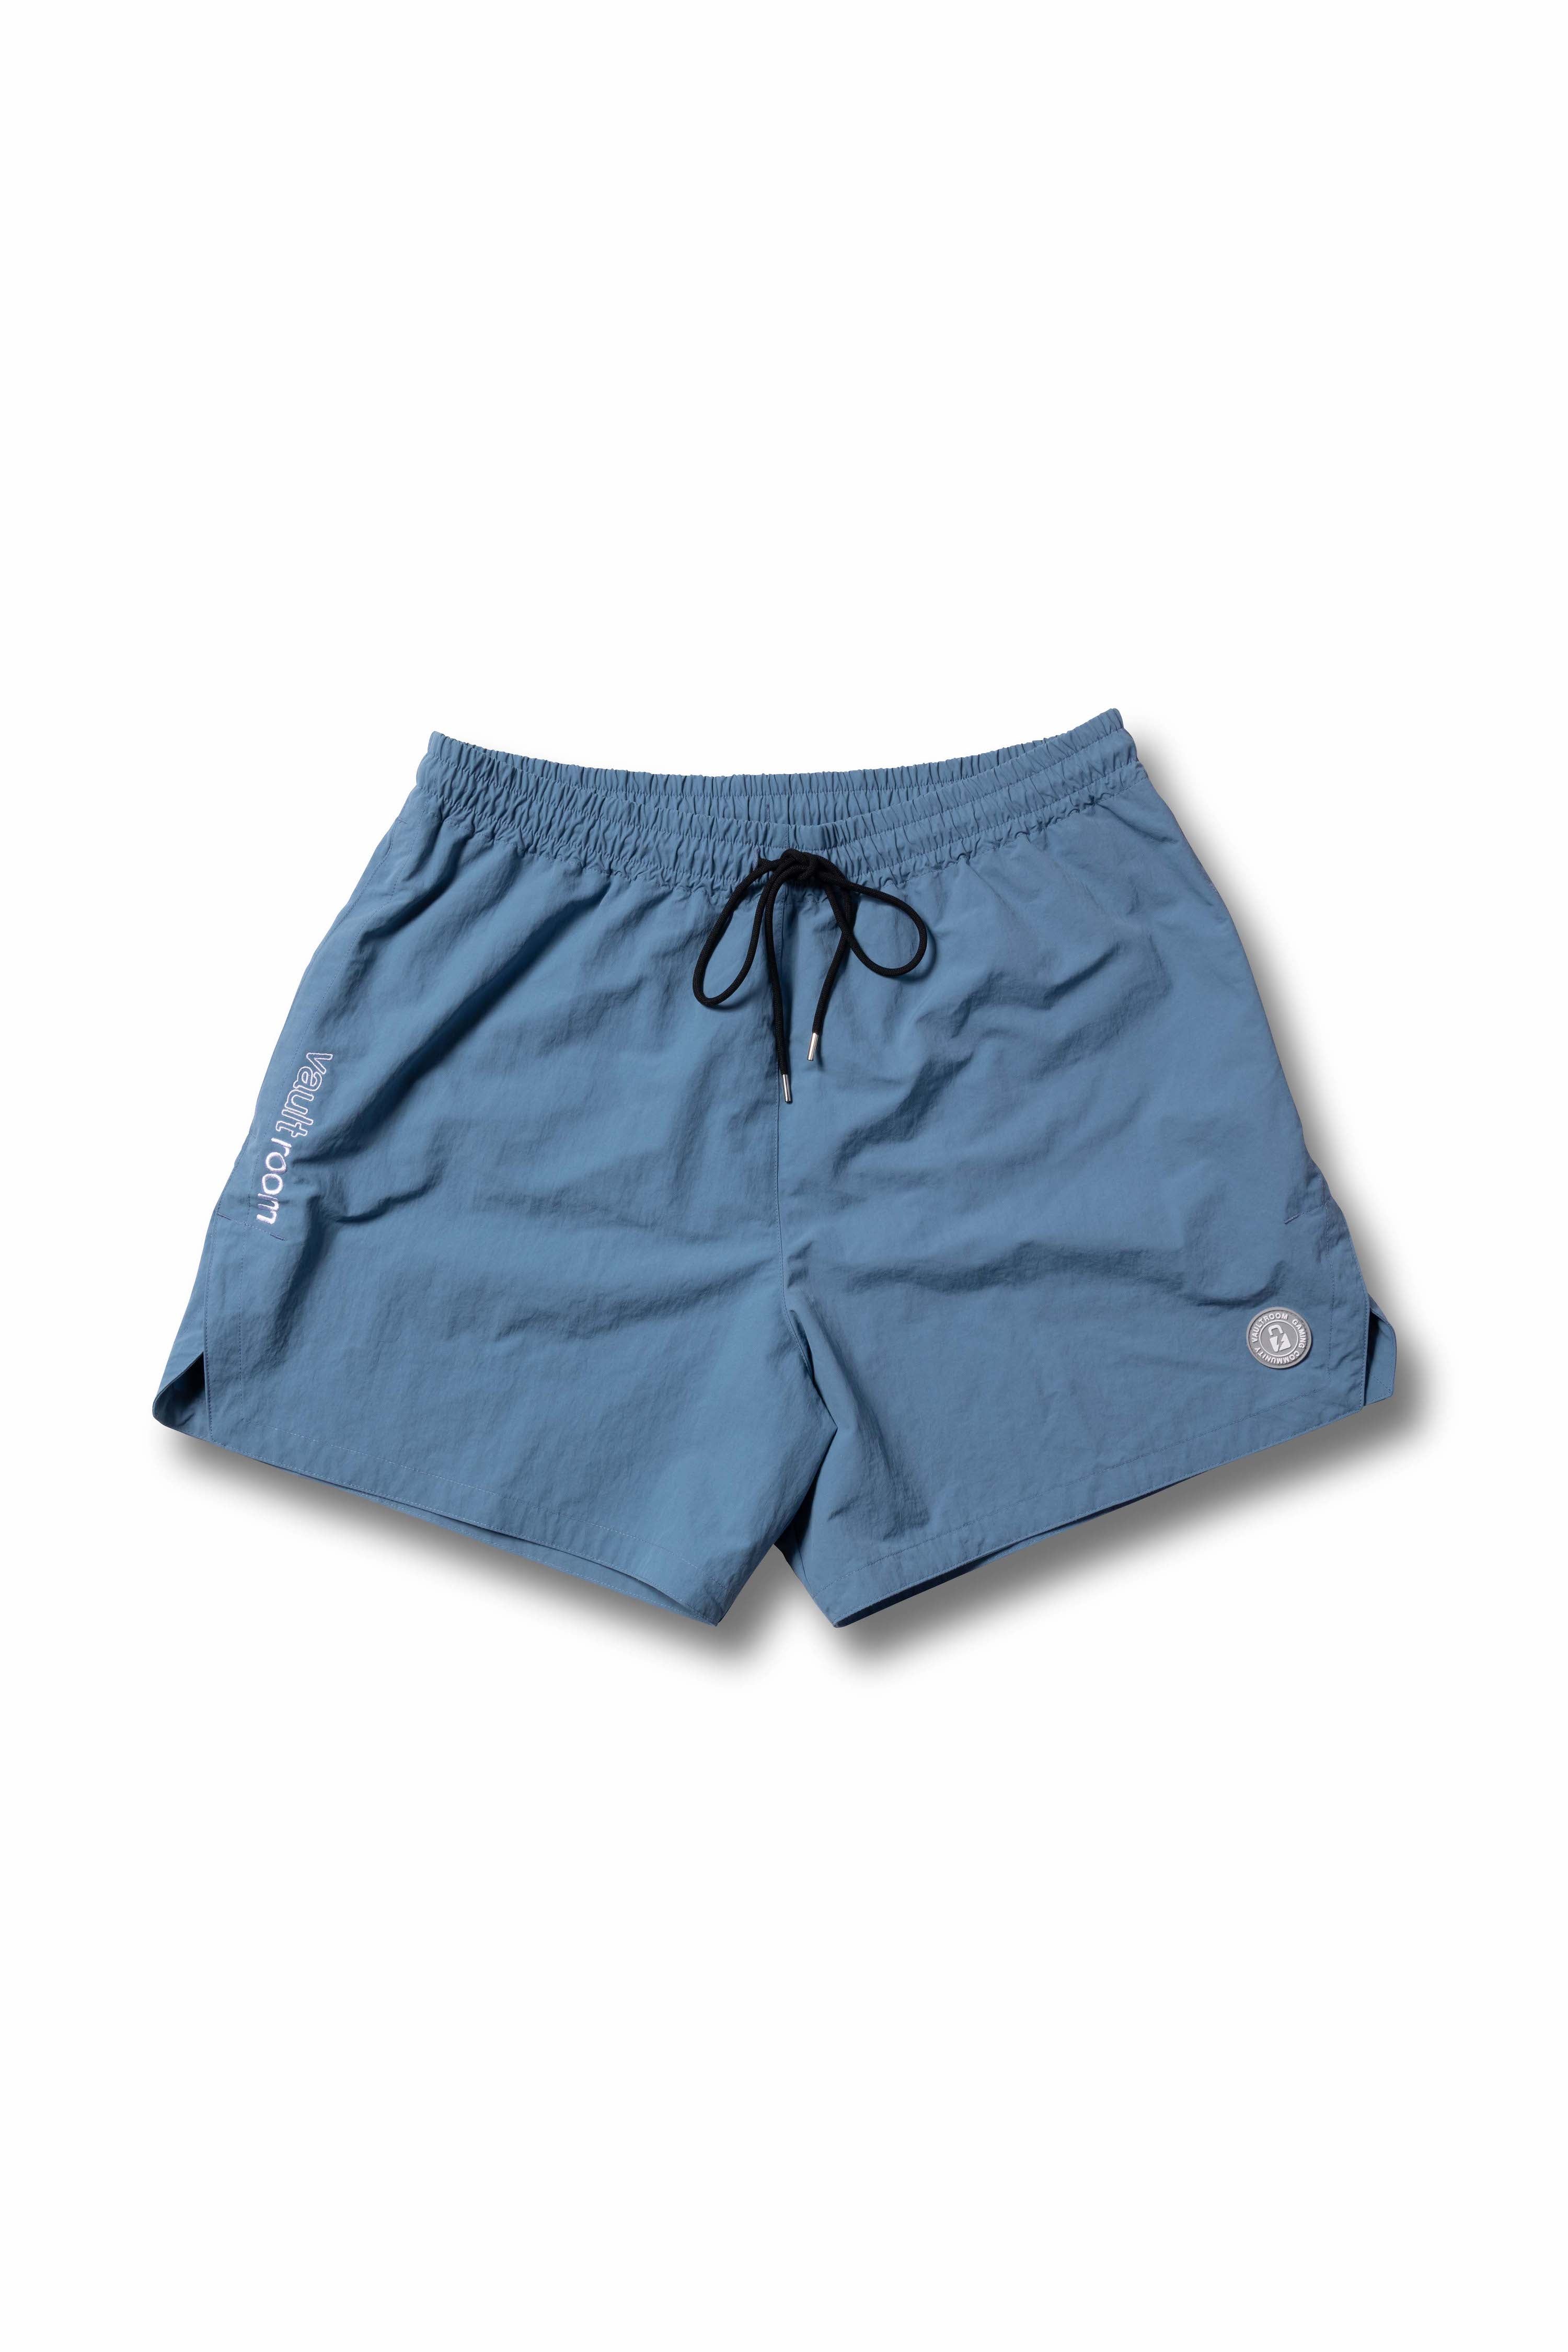 Gymshark Vital Seamless 2.0 Shorts - Faded Blue Marl